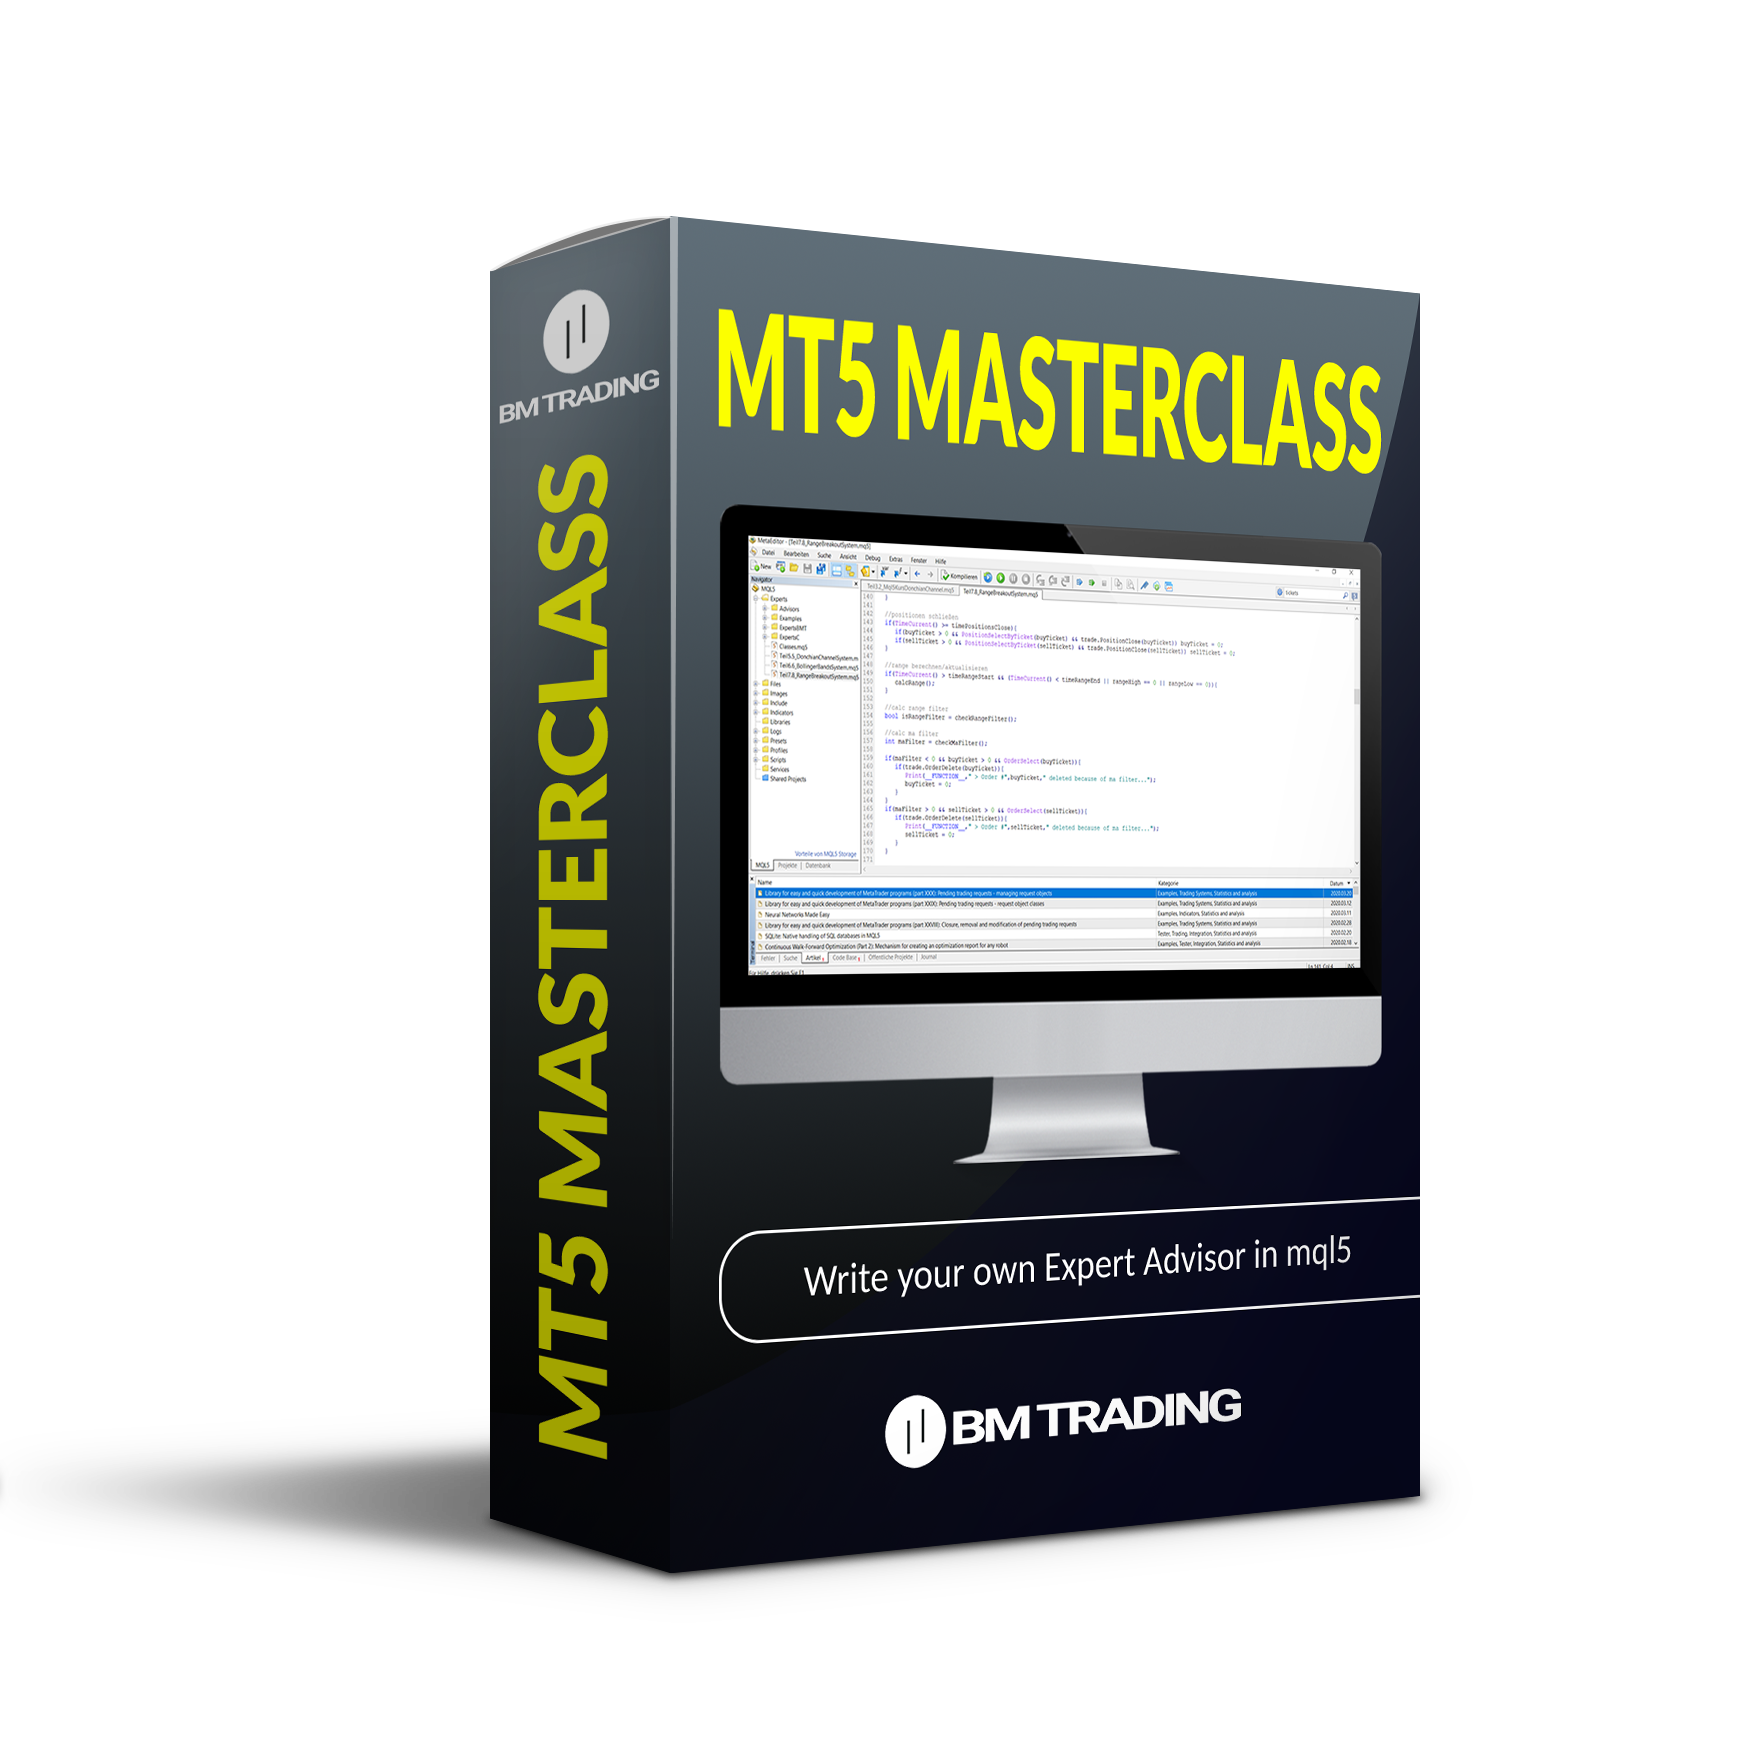 MT5 Masterclass Product Box